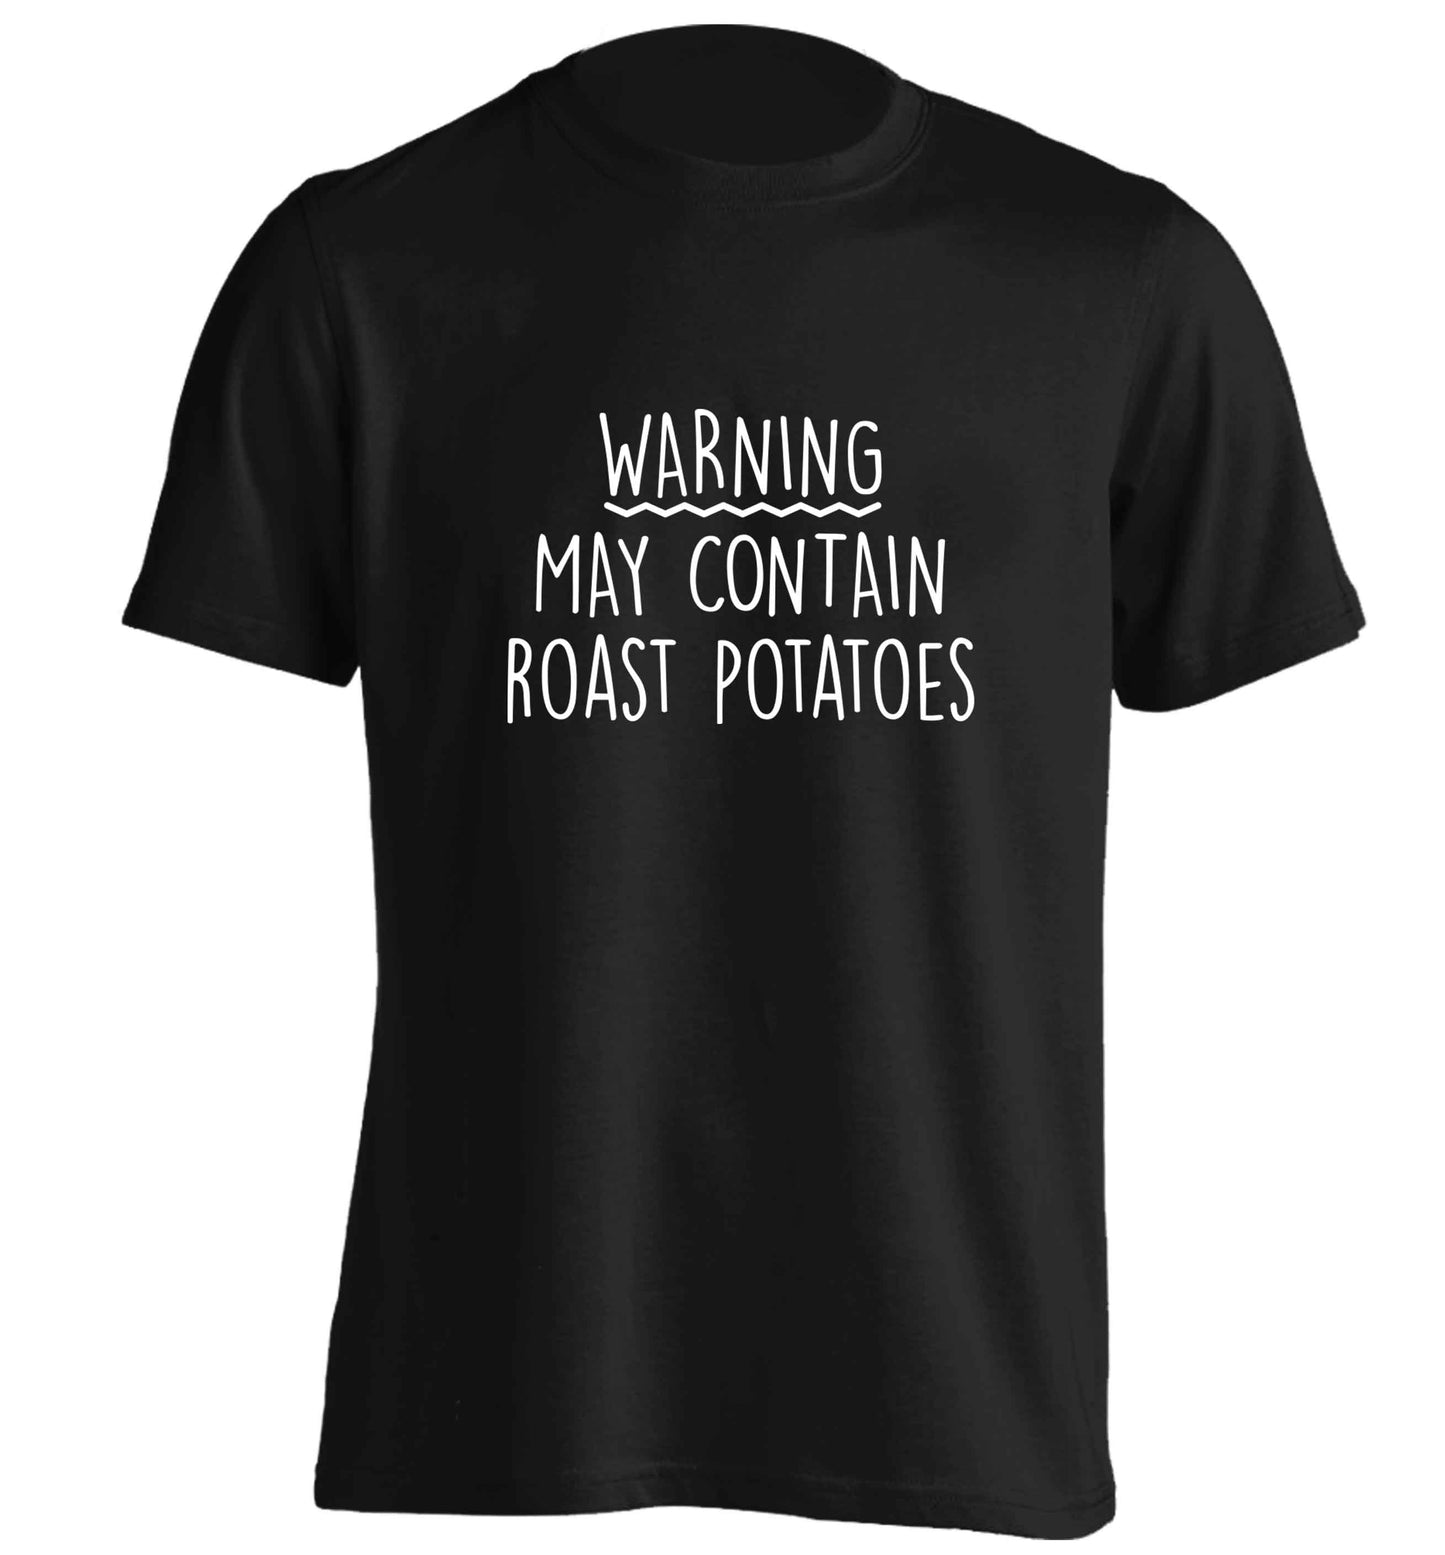 Warning may containg roast potatoes adults unisex black Tshirt 2XL